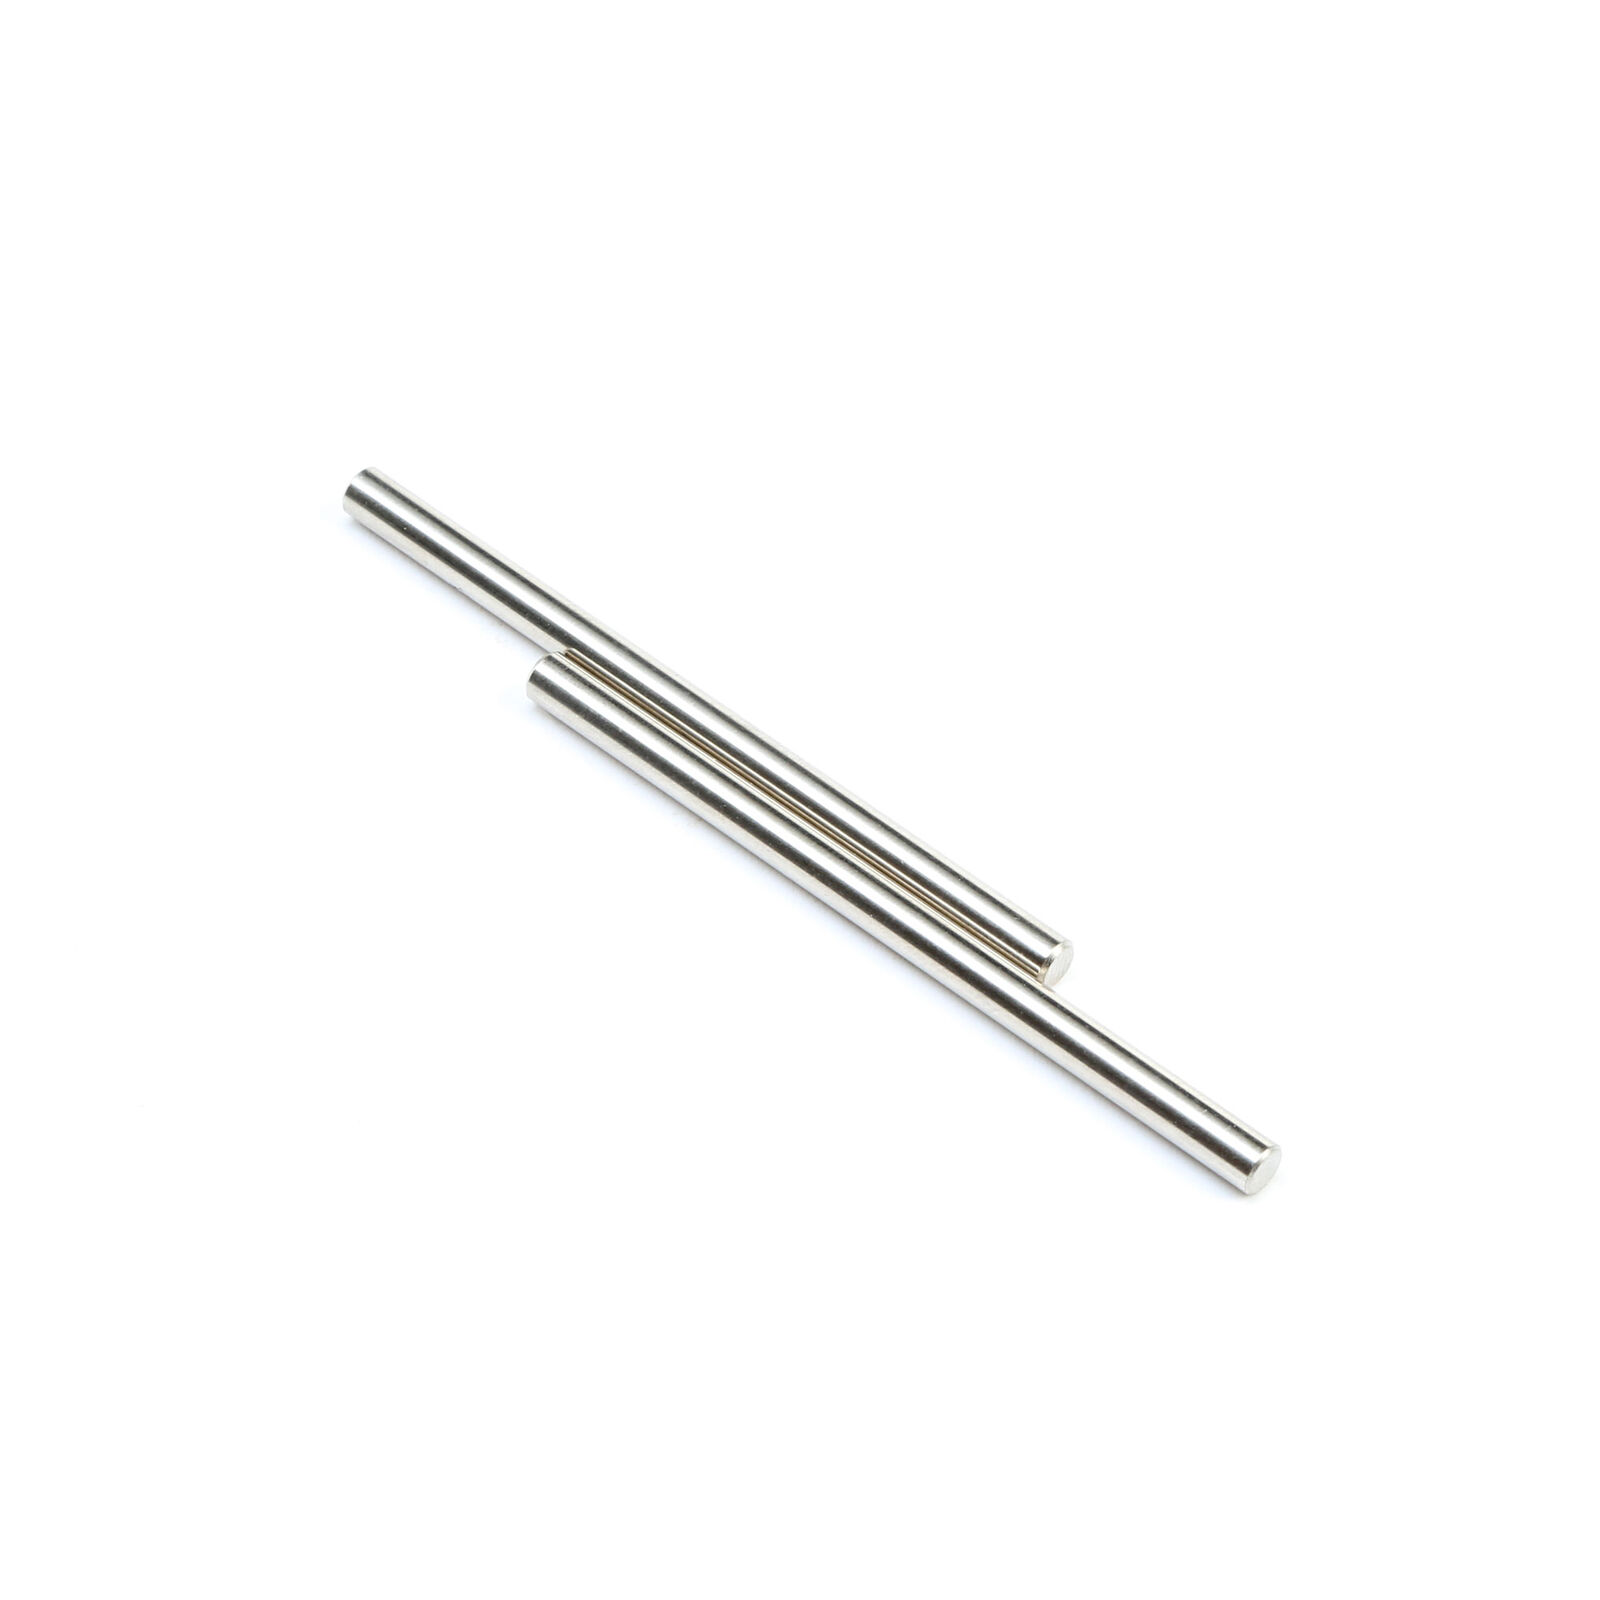 Hinge Pins 4 x 66mm Electro Nickel (2): 8X, 8XE